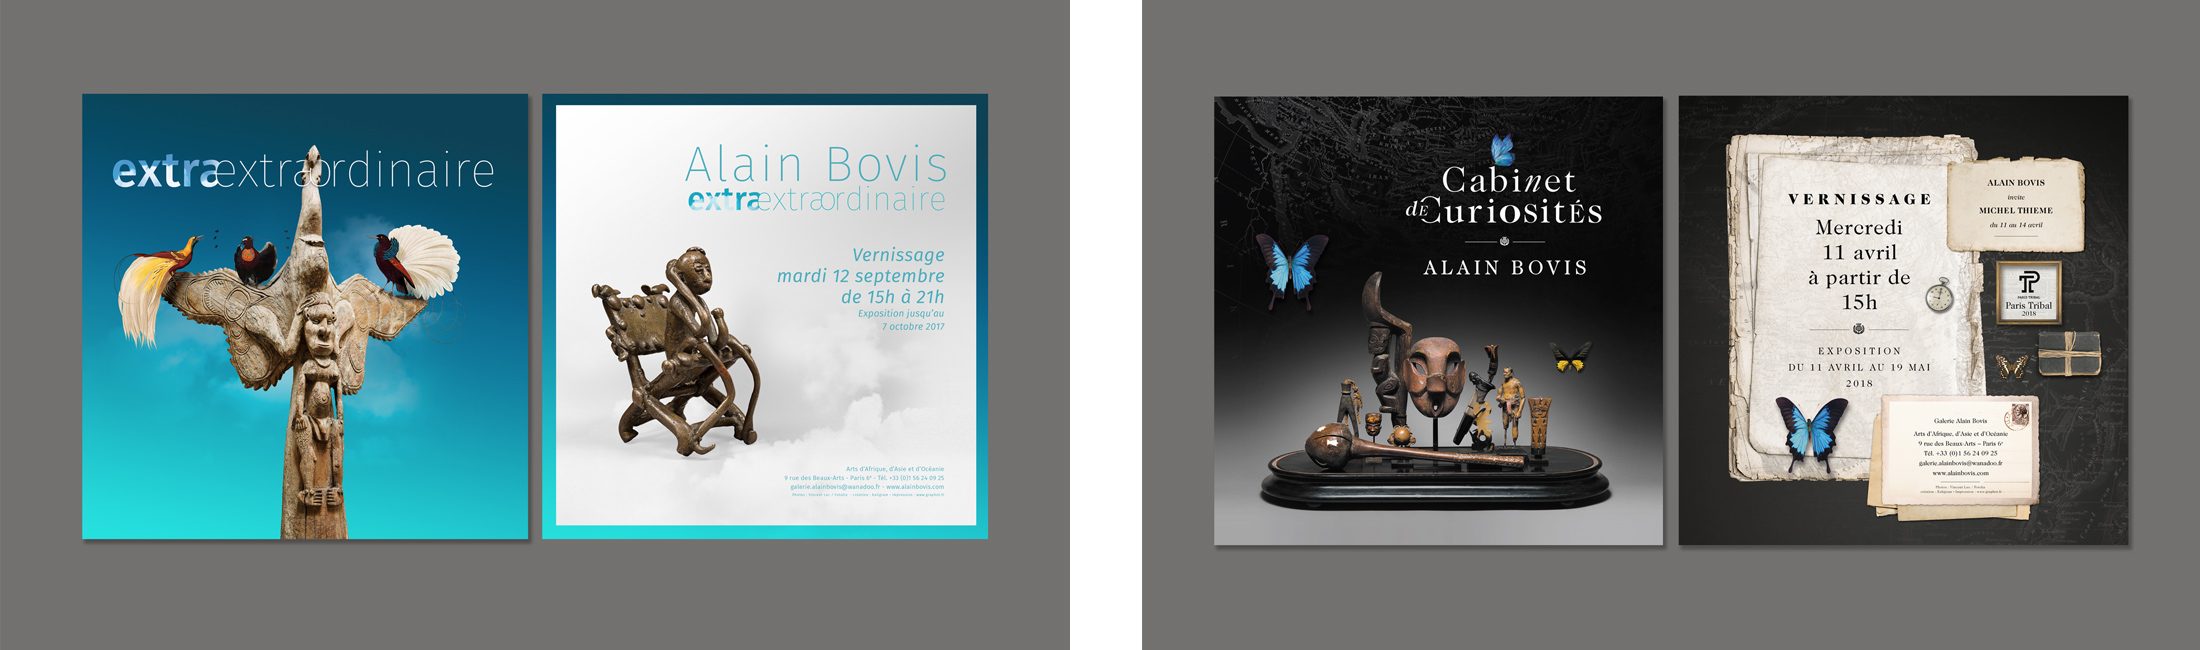 Galerie Bovis - invitation vernissage